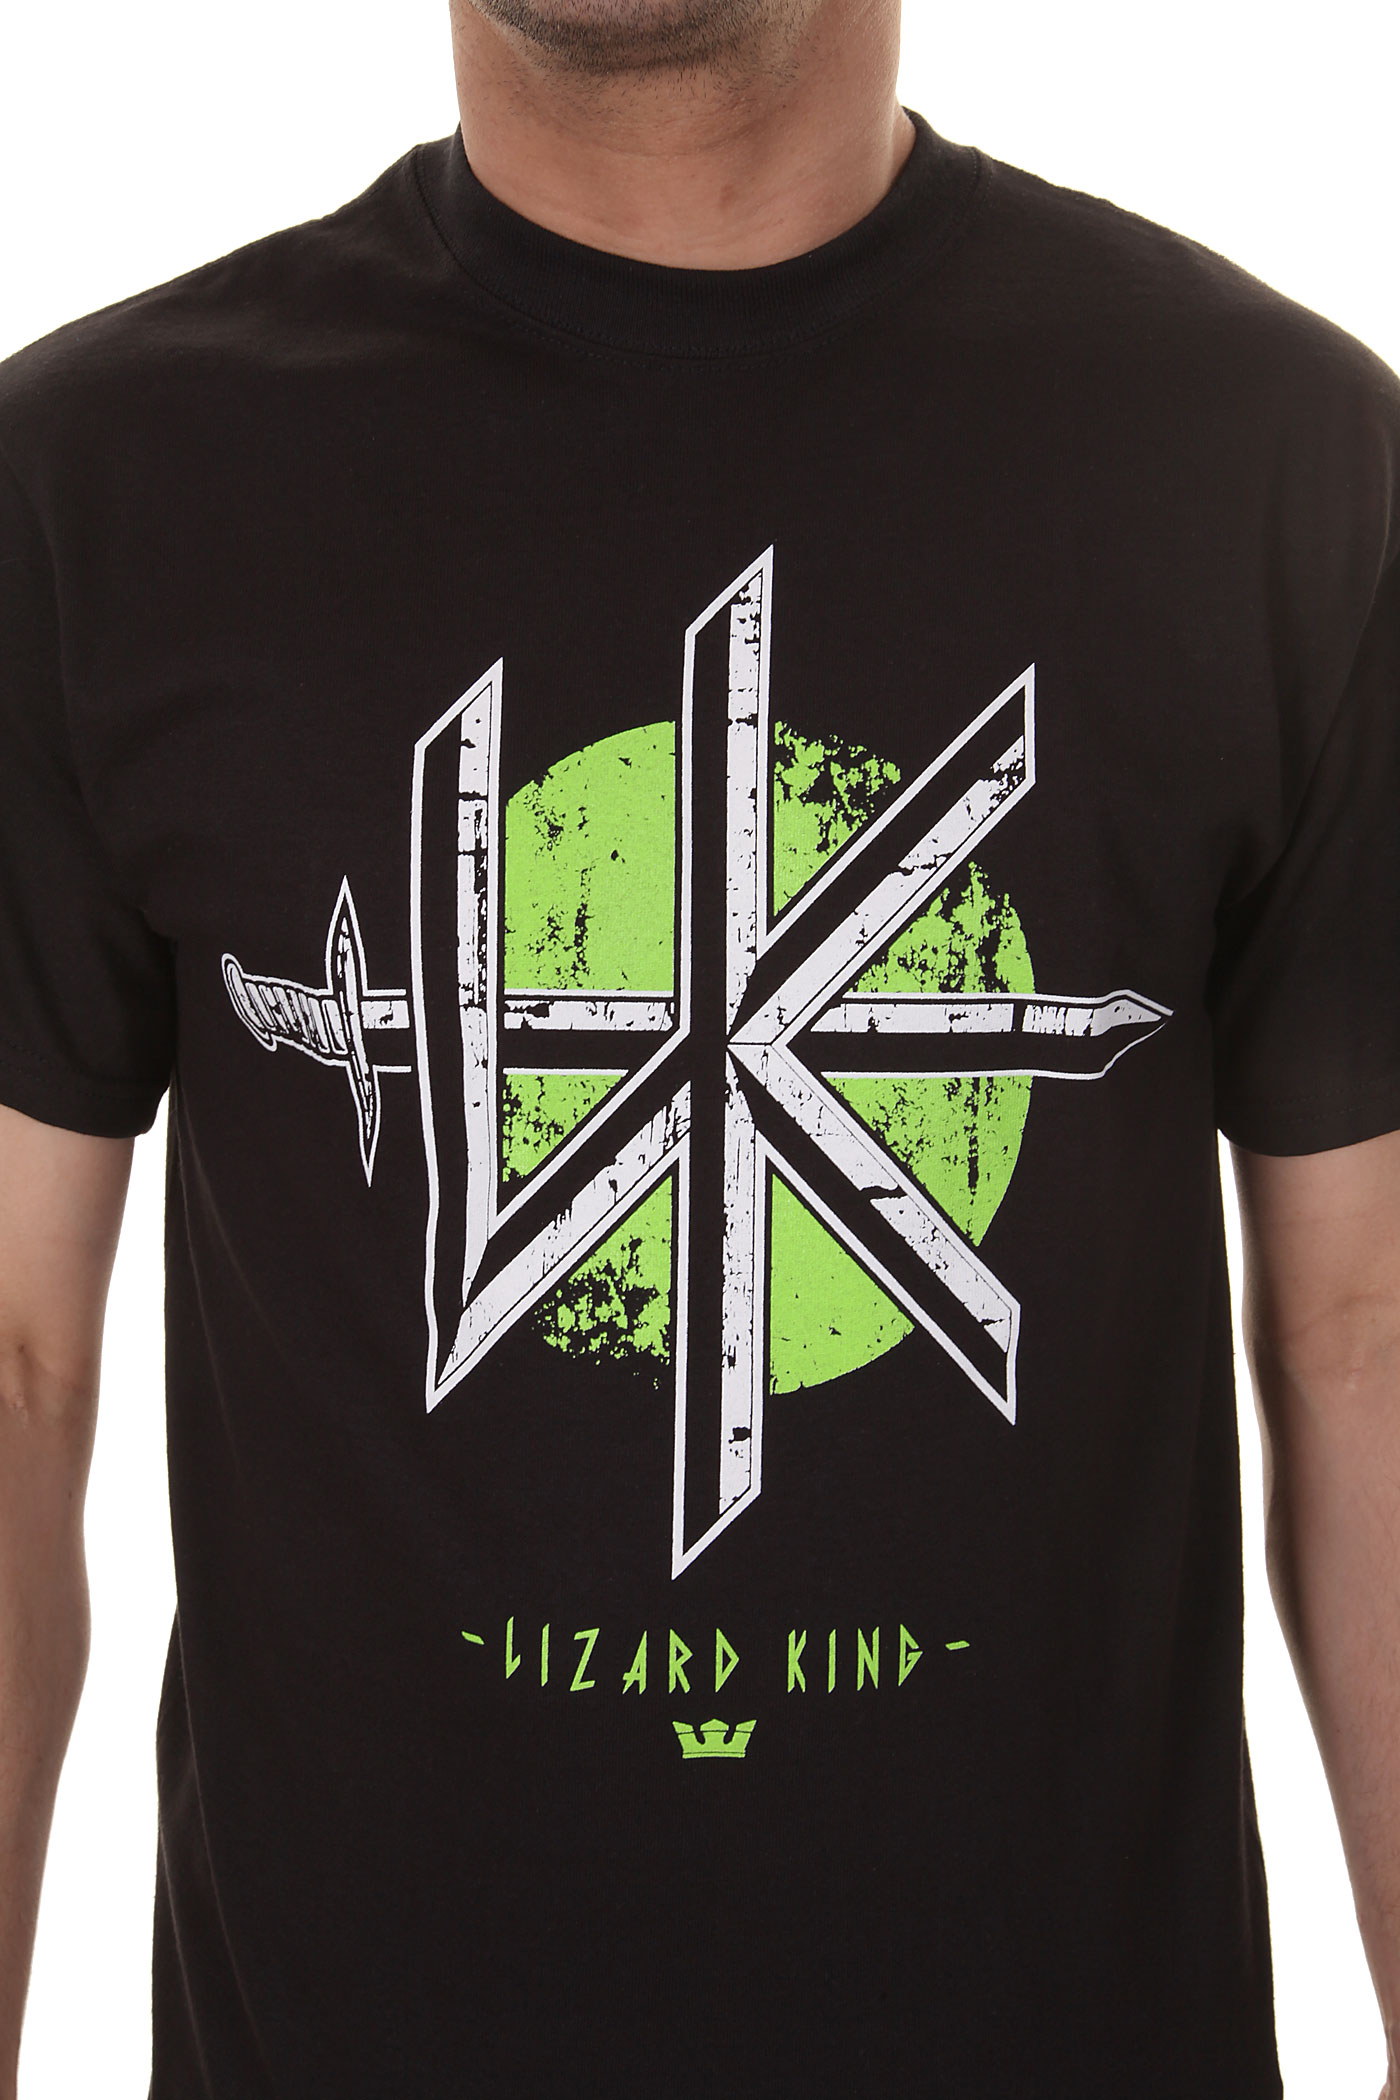 tome de savoie - Supra Lizard King T-Shirt (black) buy at skatedeluxe